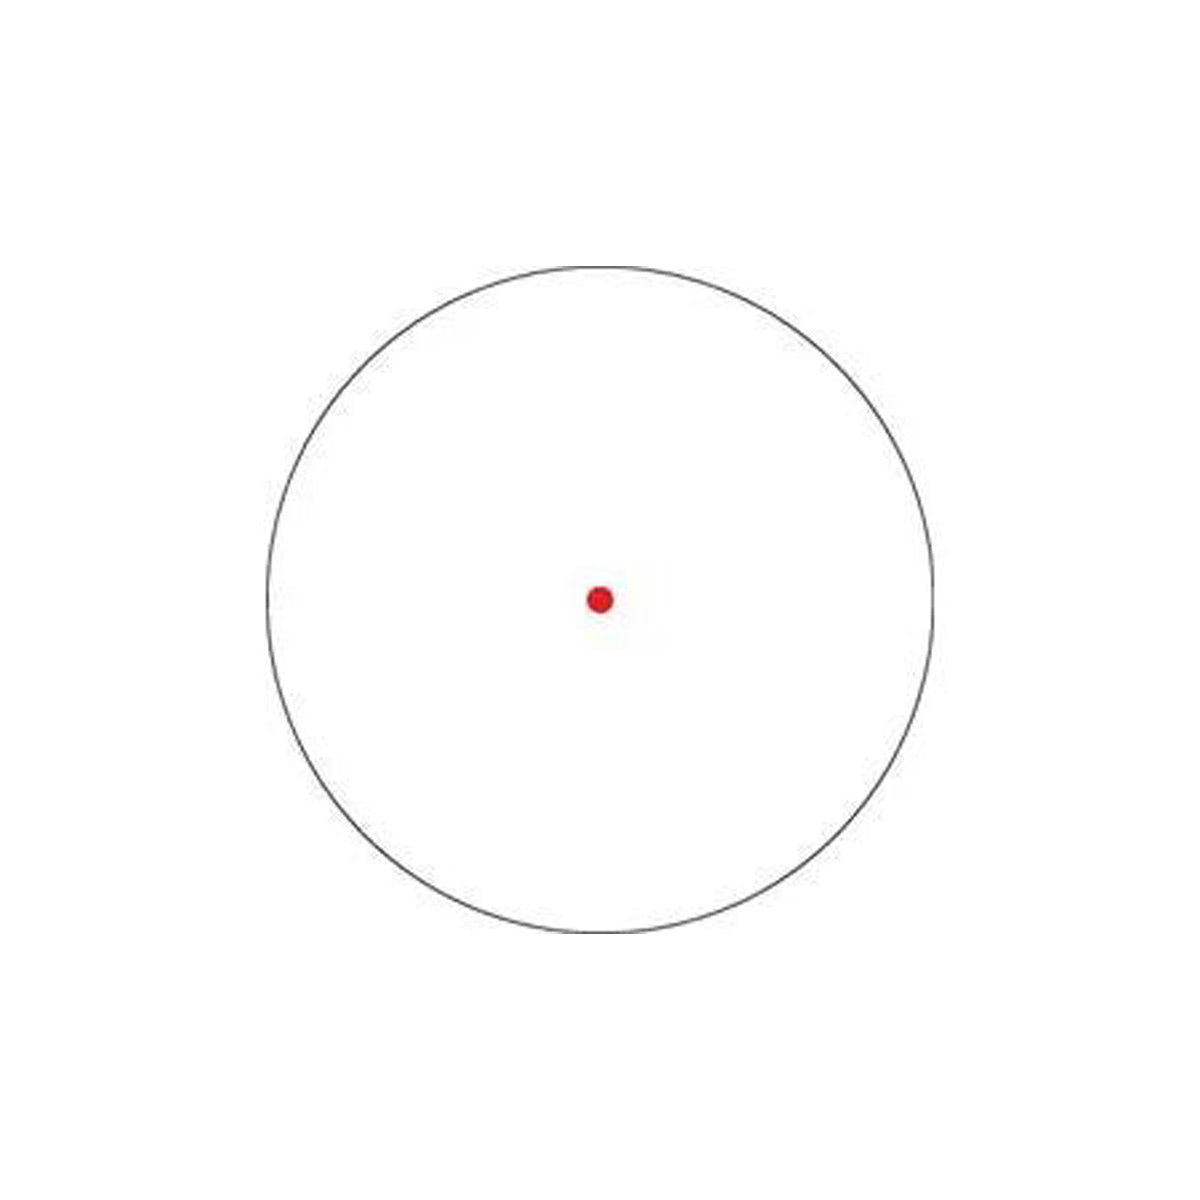 Vortex Crossfire II 2 MOA Red Dot Sight in  by GOHUNT | Vortex Optics - GOHUNT Shop